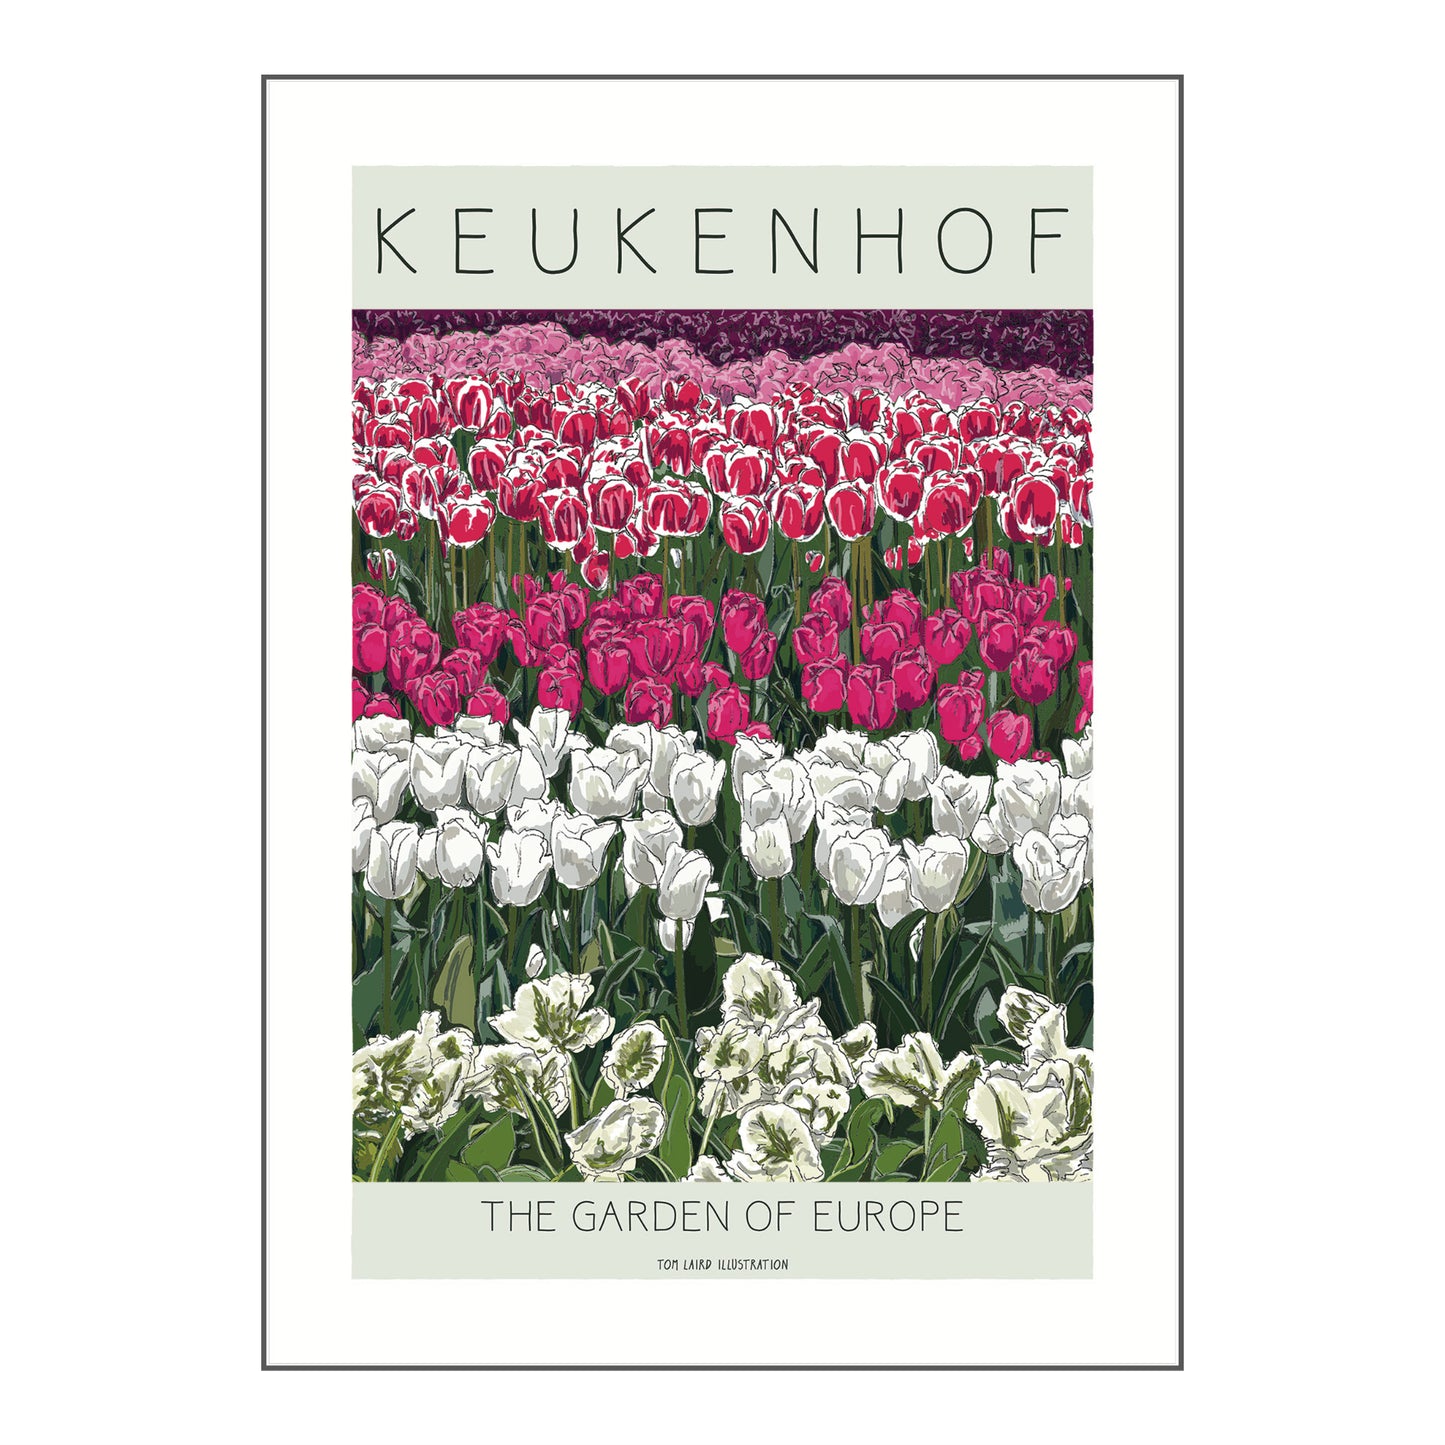 Keukenhof 2 - The Garden of Europe